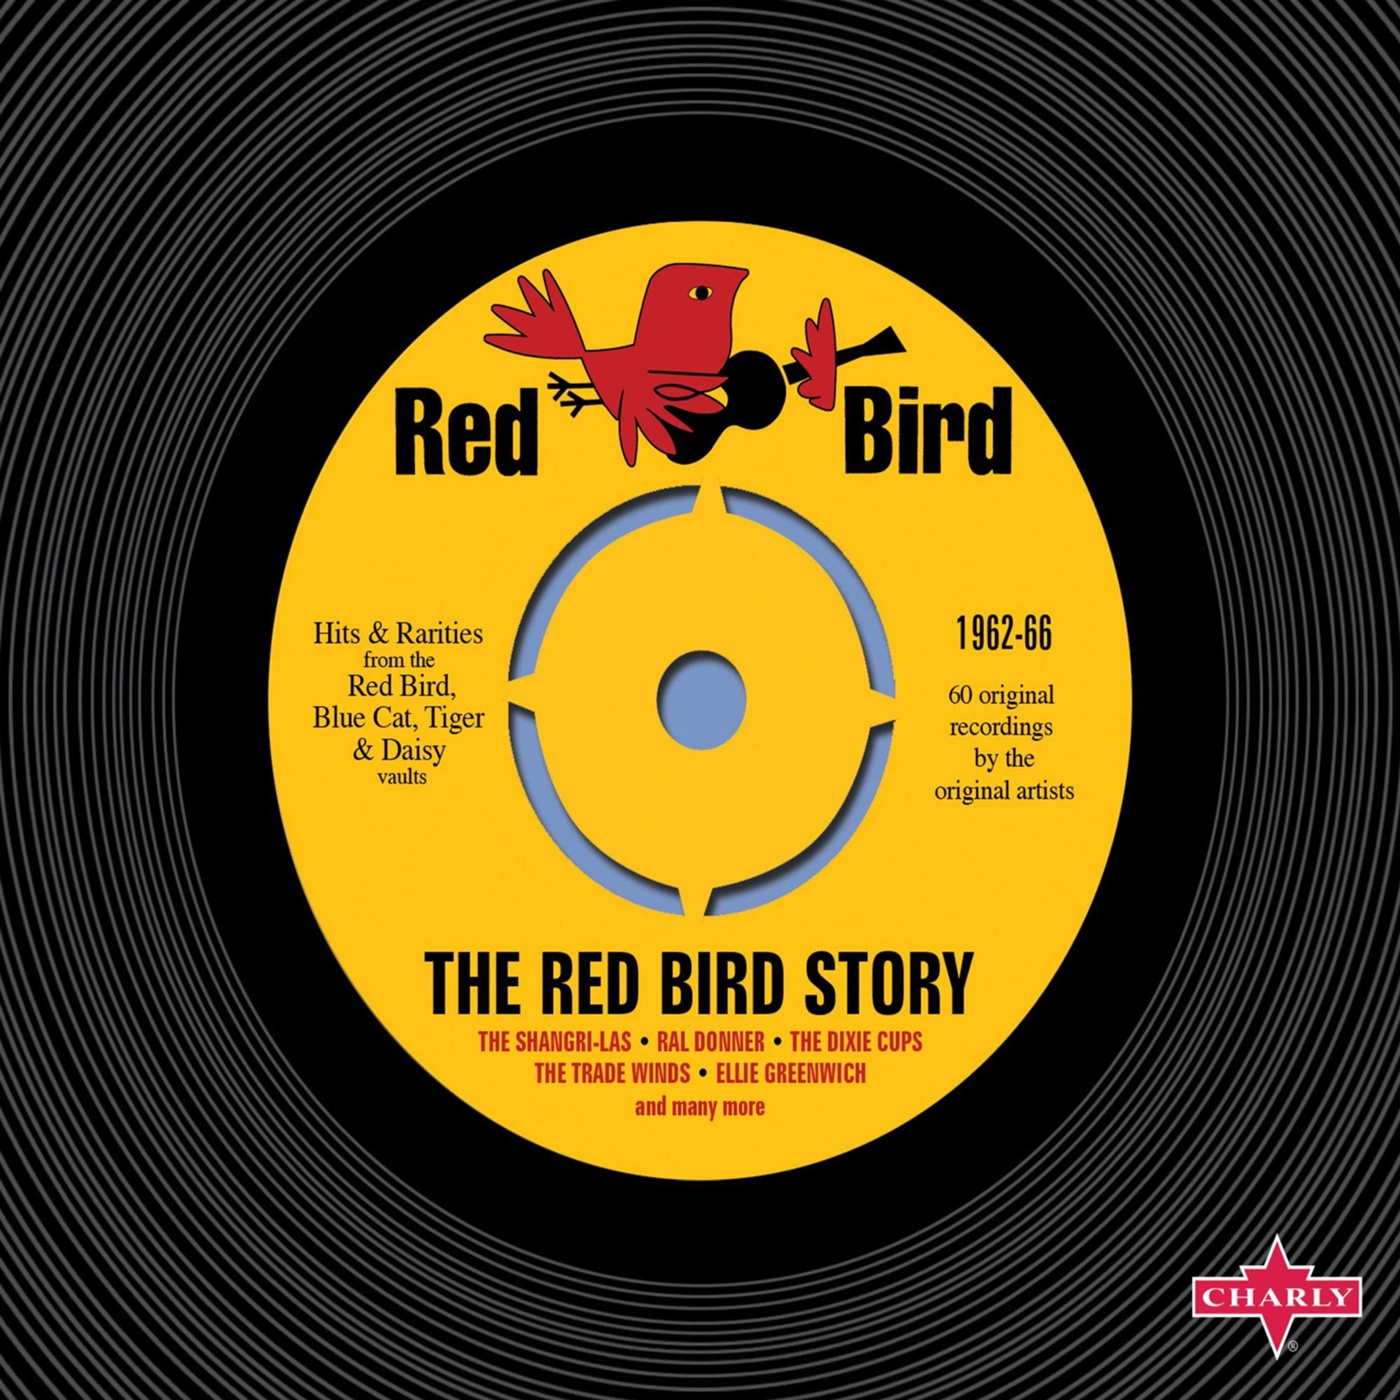 LP various artists: Sun Blues. Various artists Birds of Prey - the album Vinyl. A Bird story. Bird story Soundtrack.